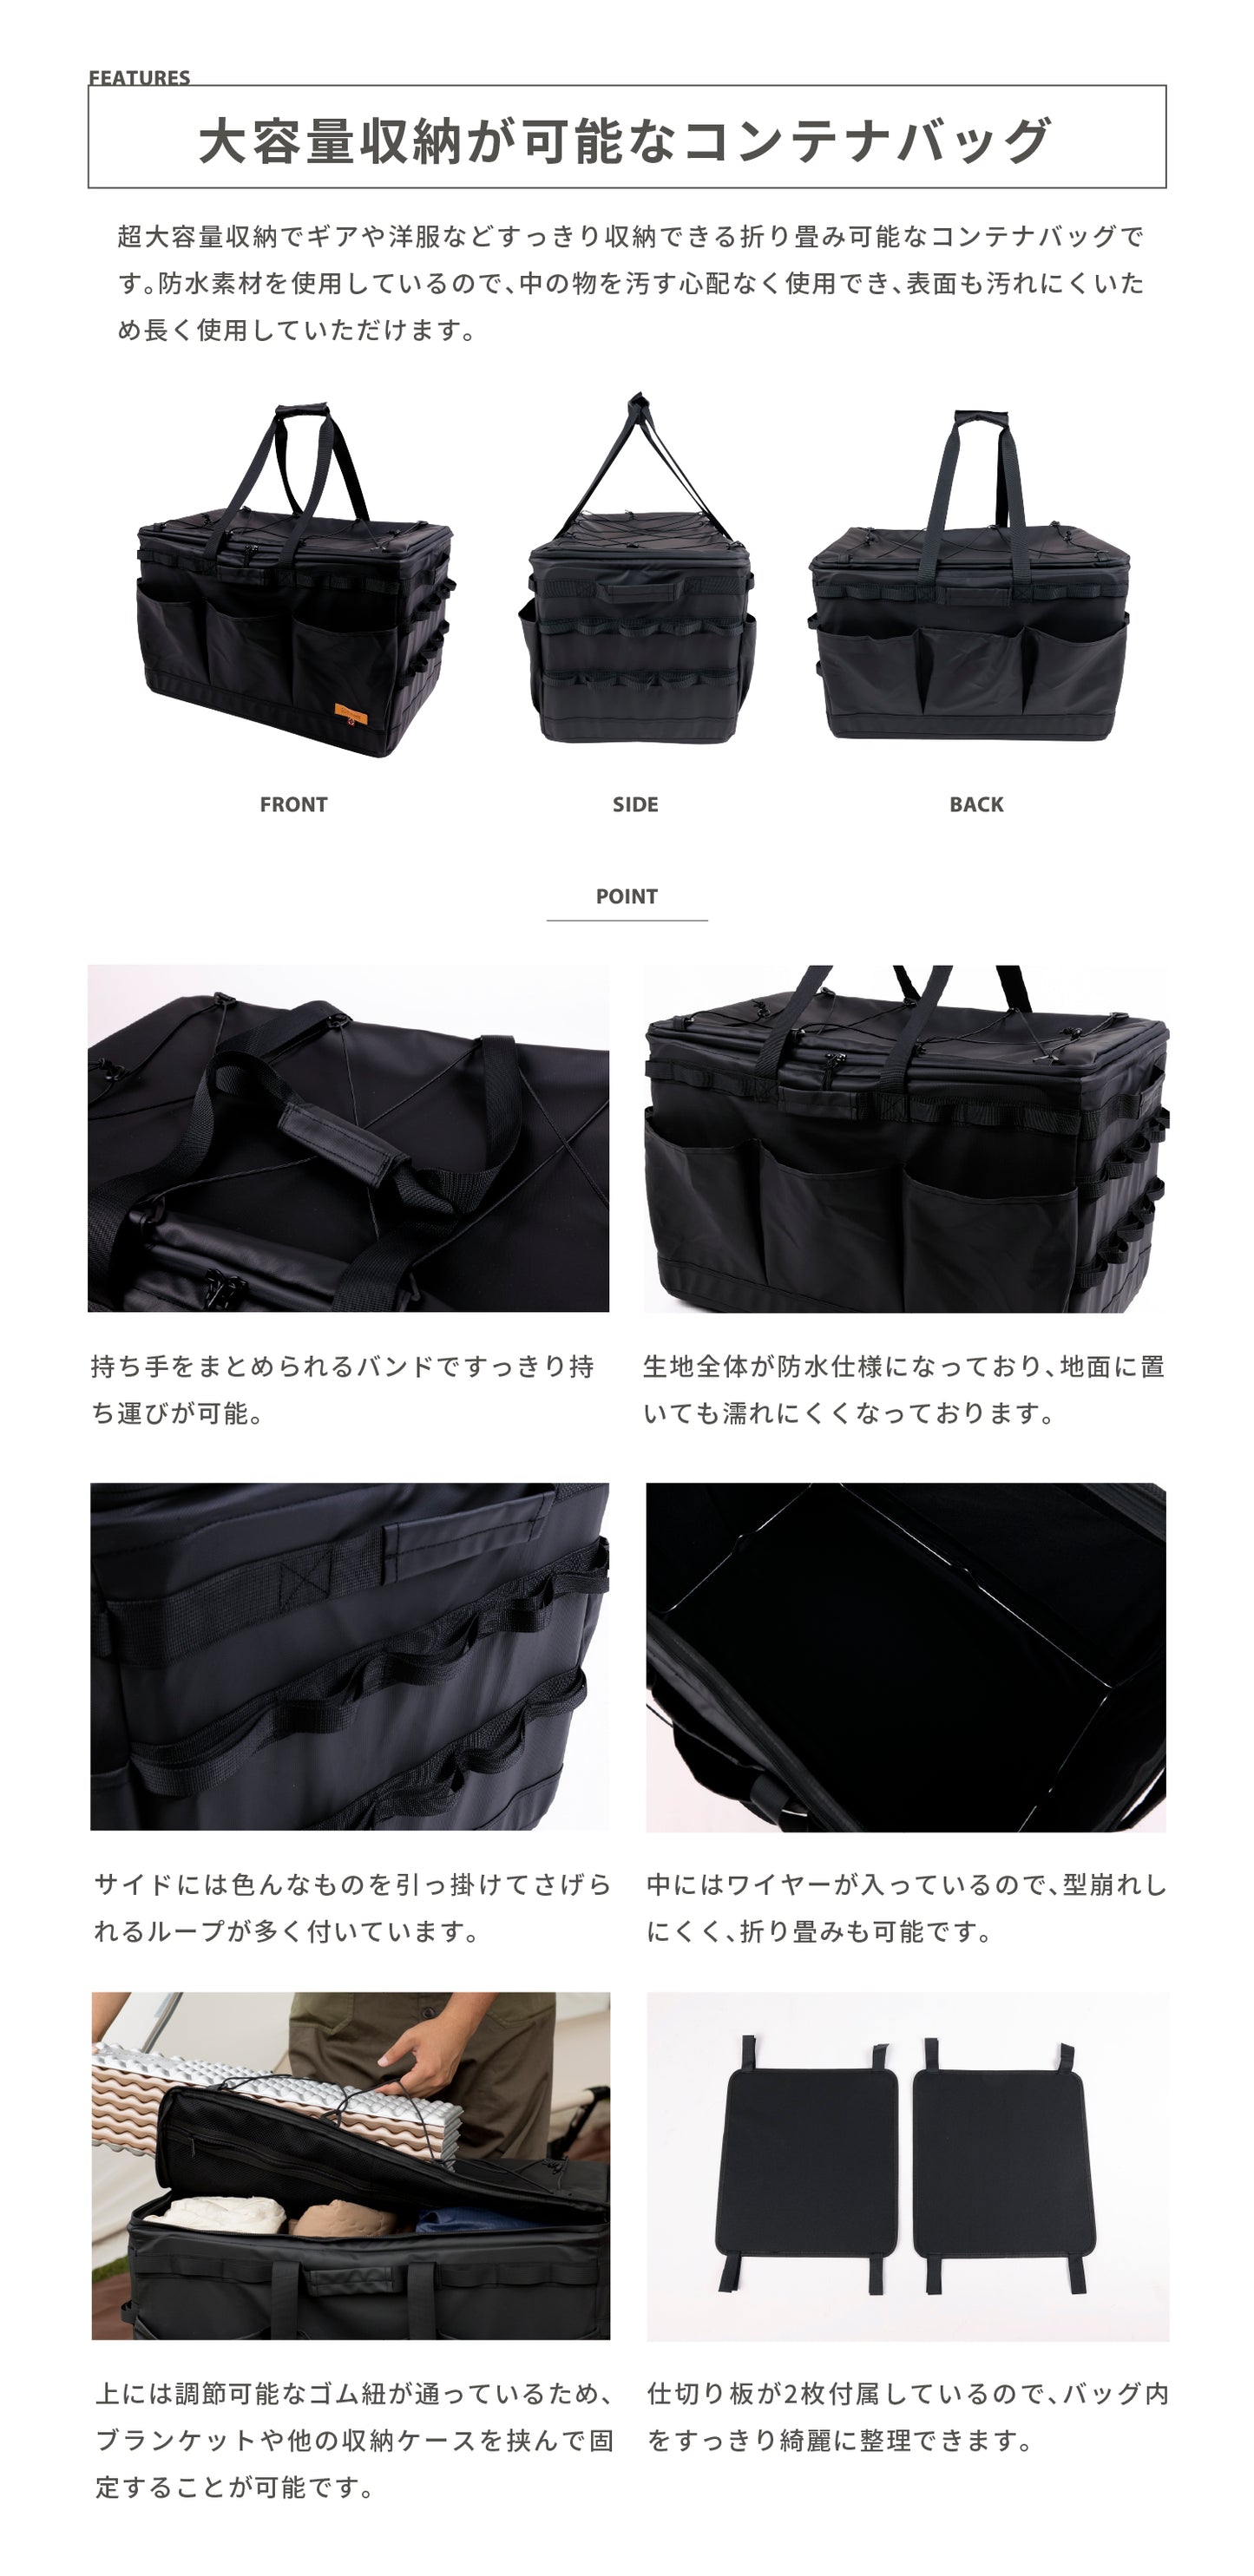 【 Deft Container 】デフトコンテナ 大容量収納可能なコンテナバッグ